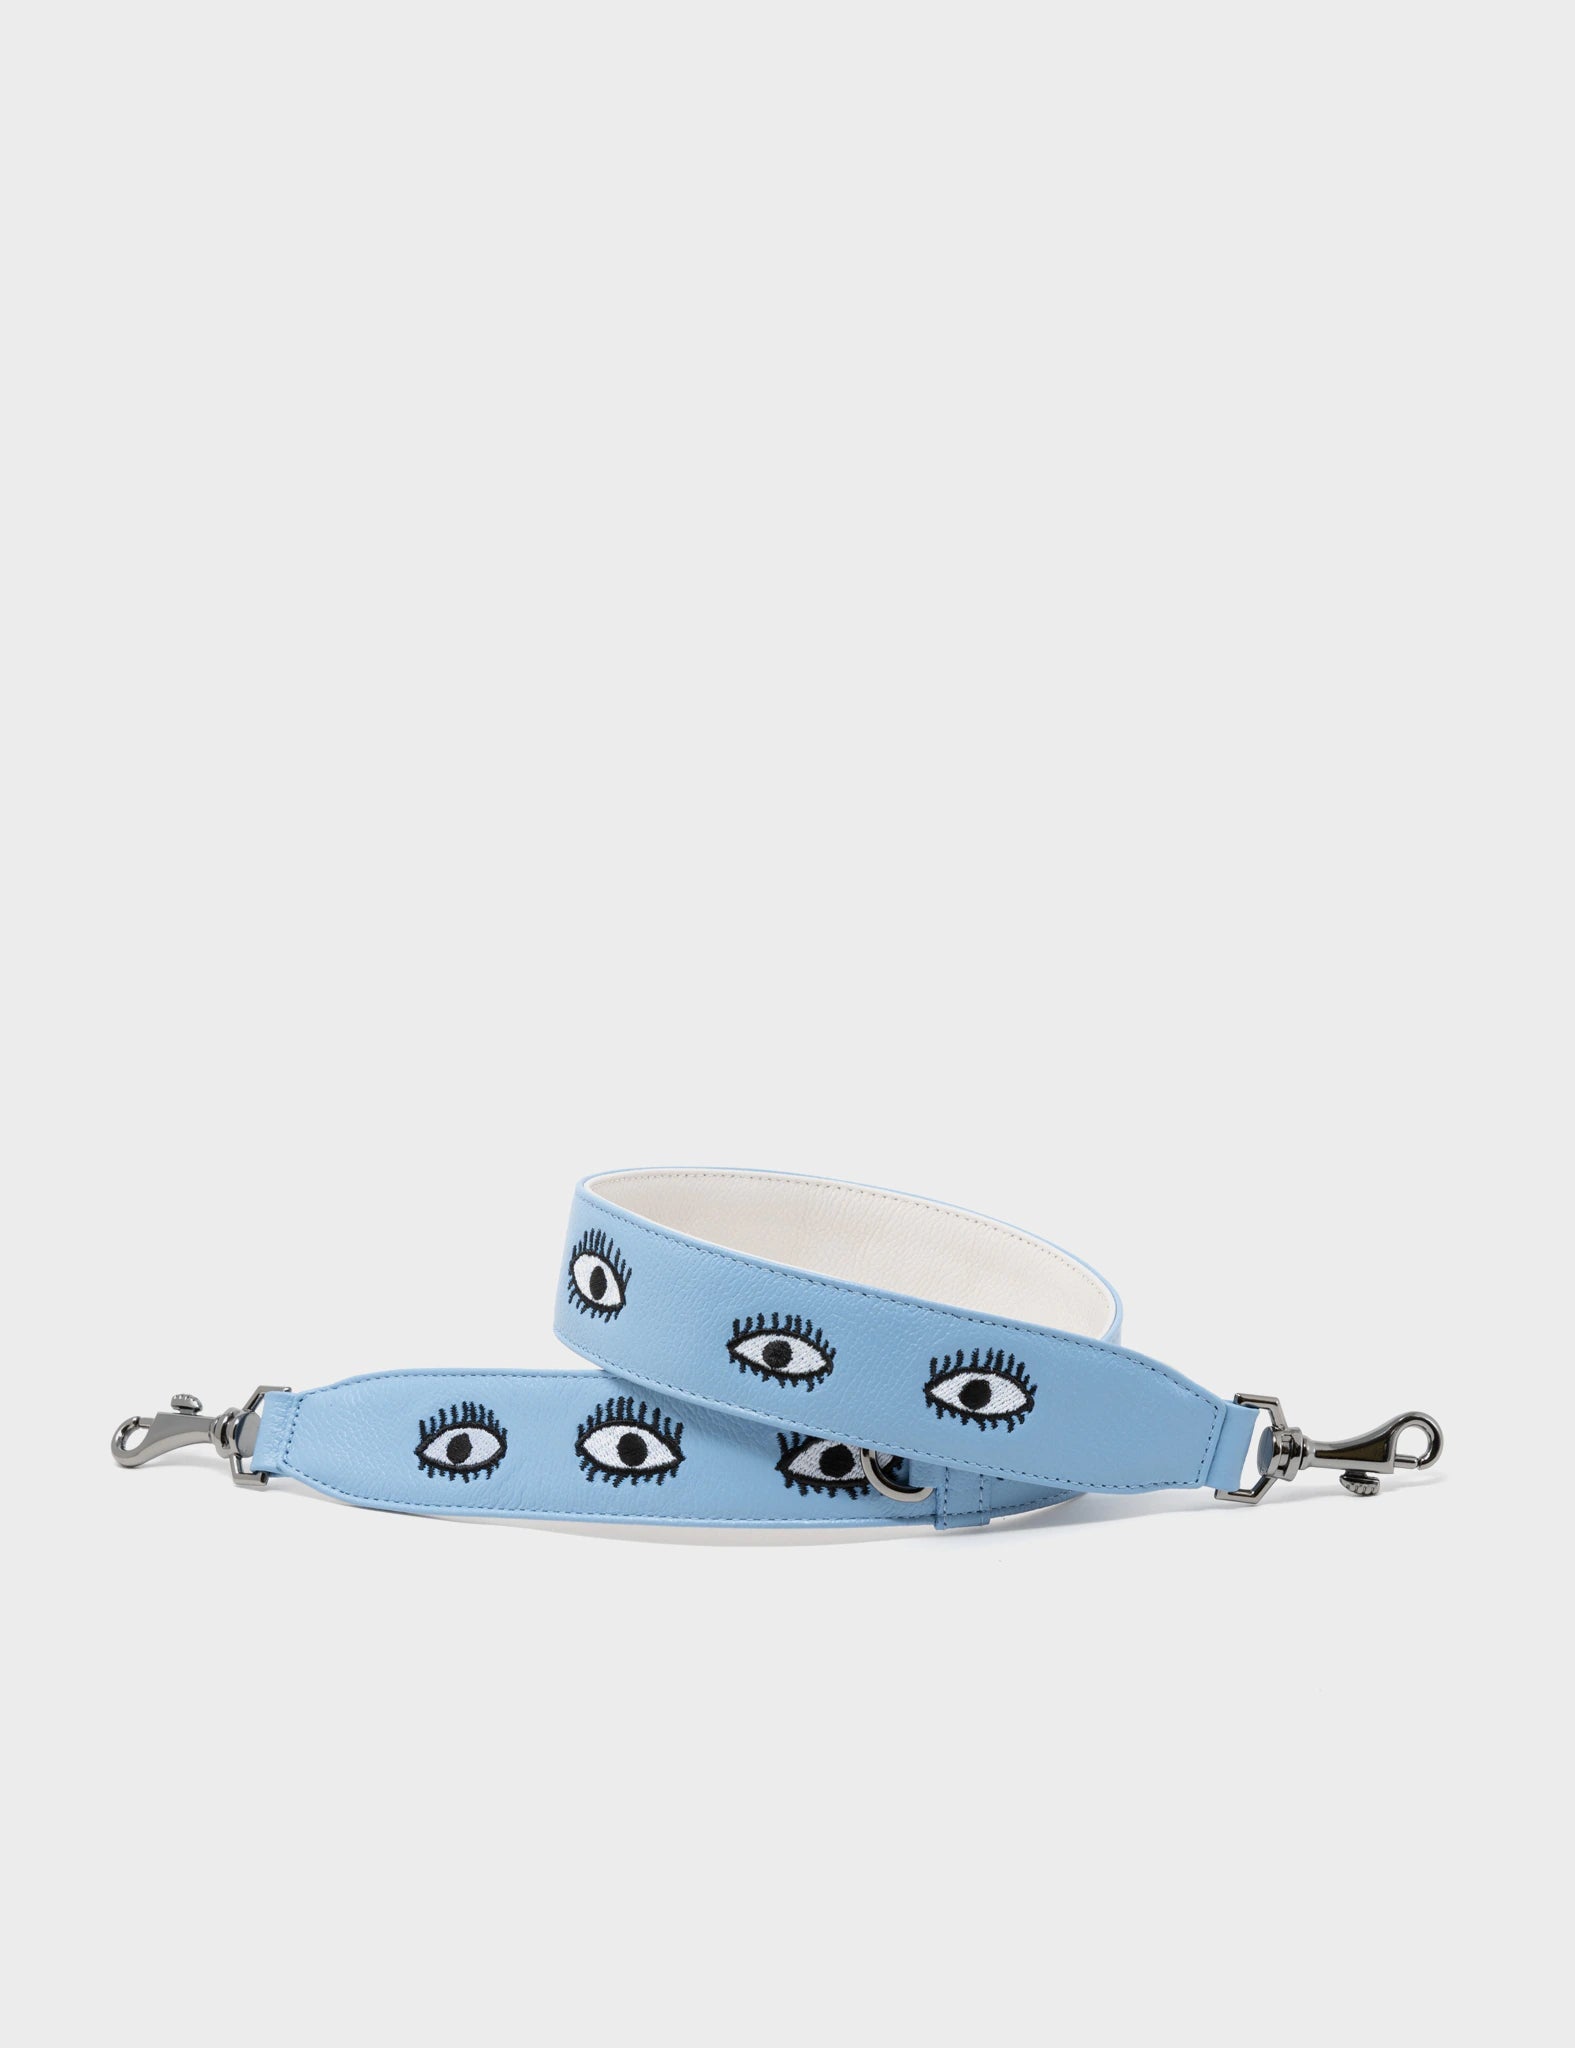 Detachable Short Sky Blue Leather Strap | Eyes Embroidery Design - Hardware